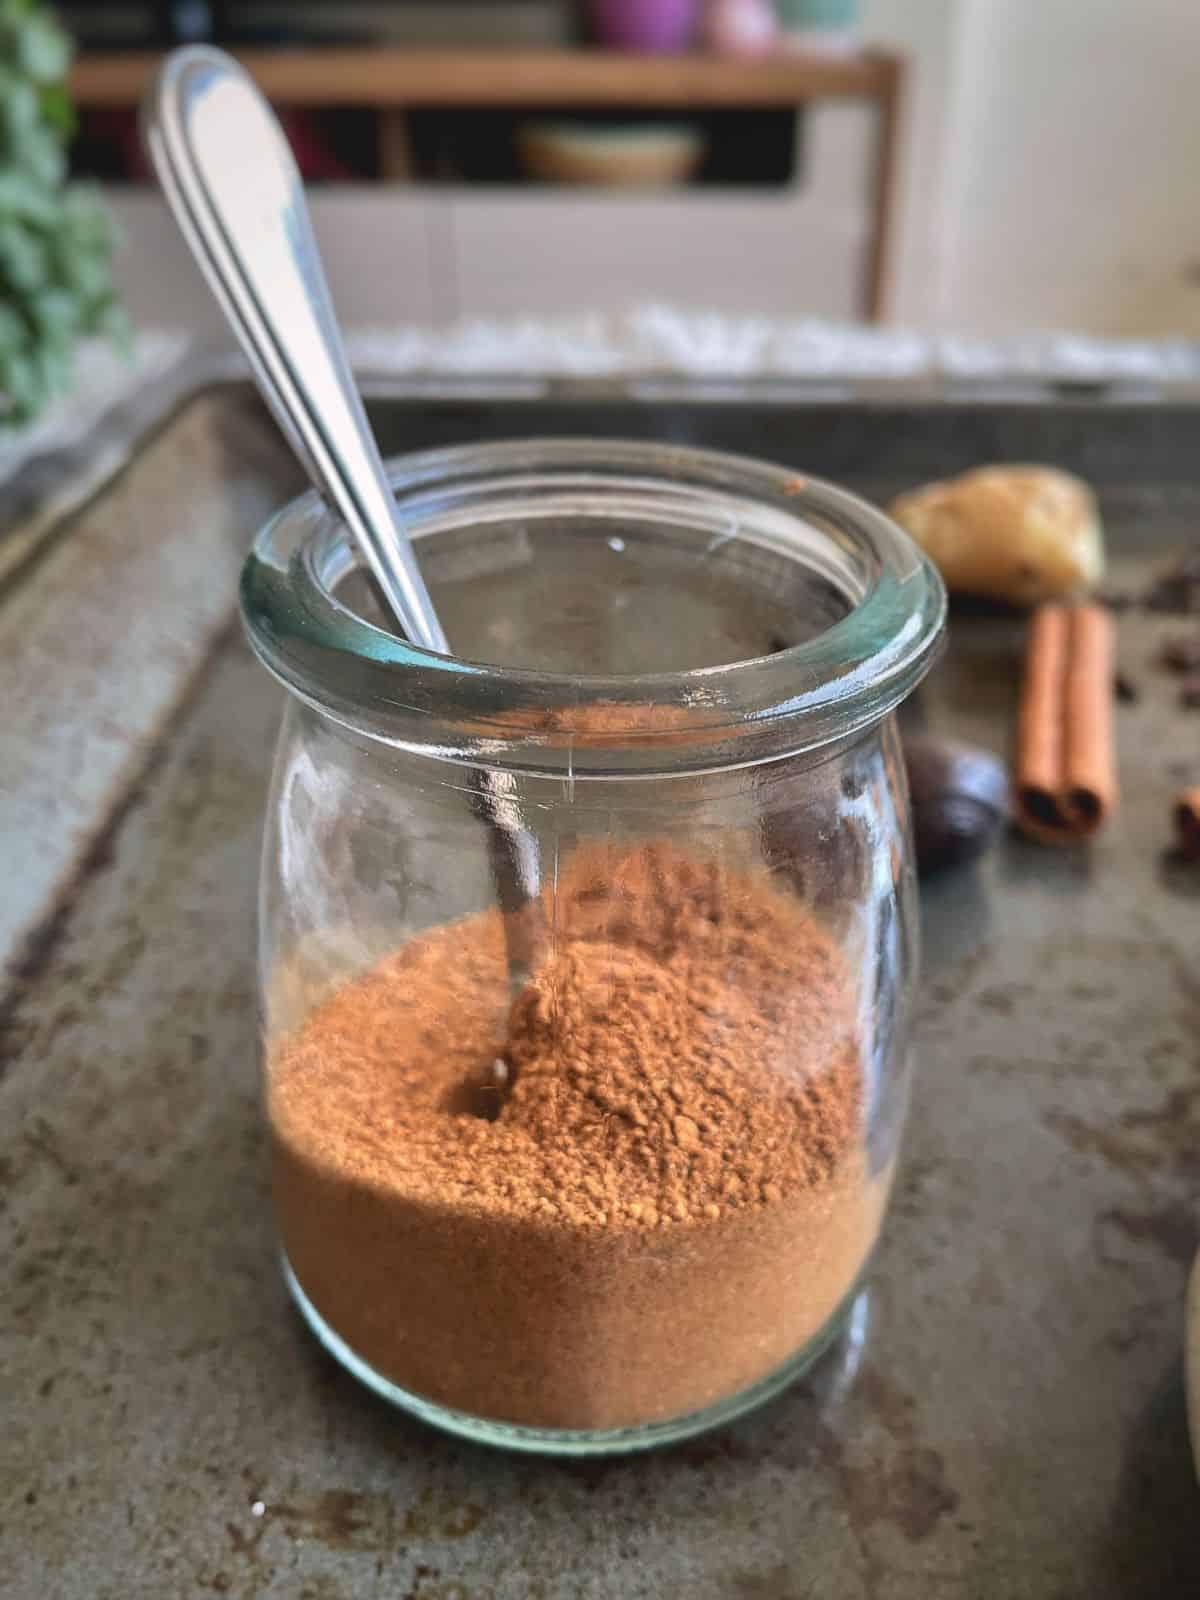 spice mix in a jar.